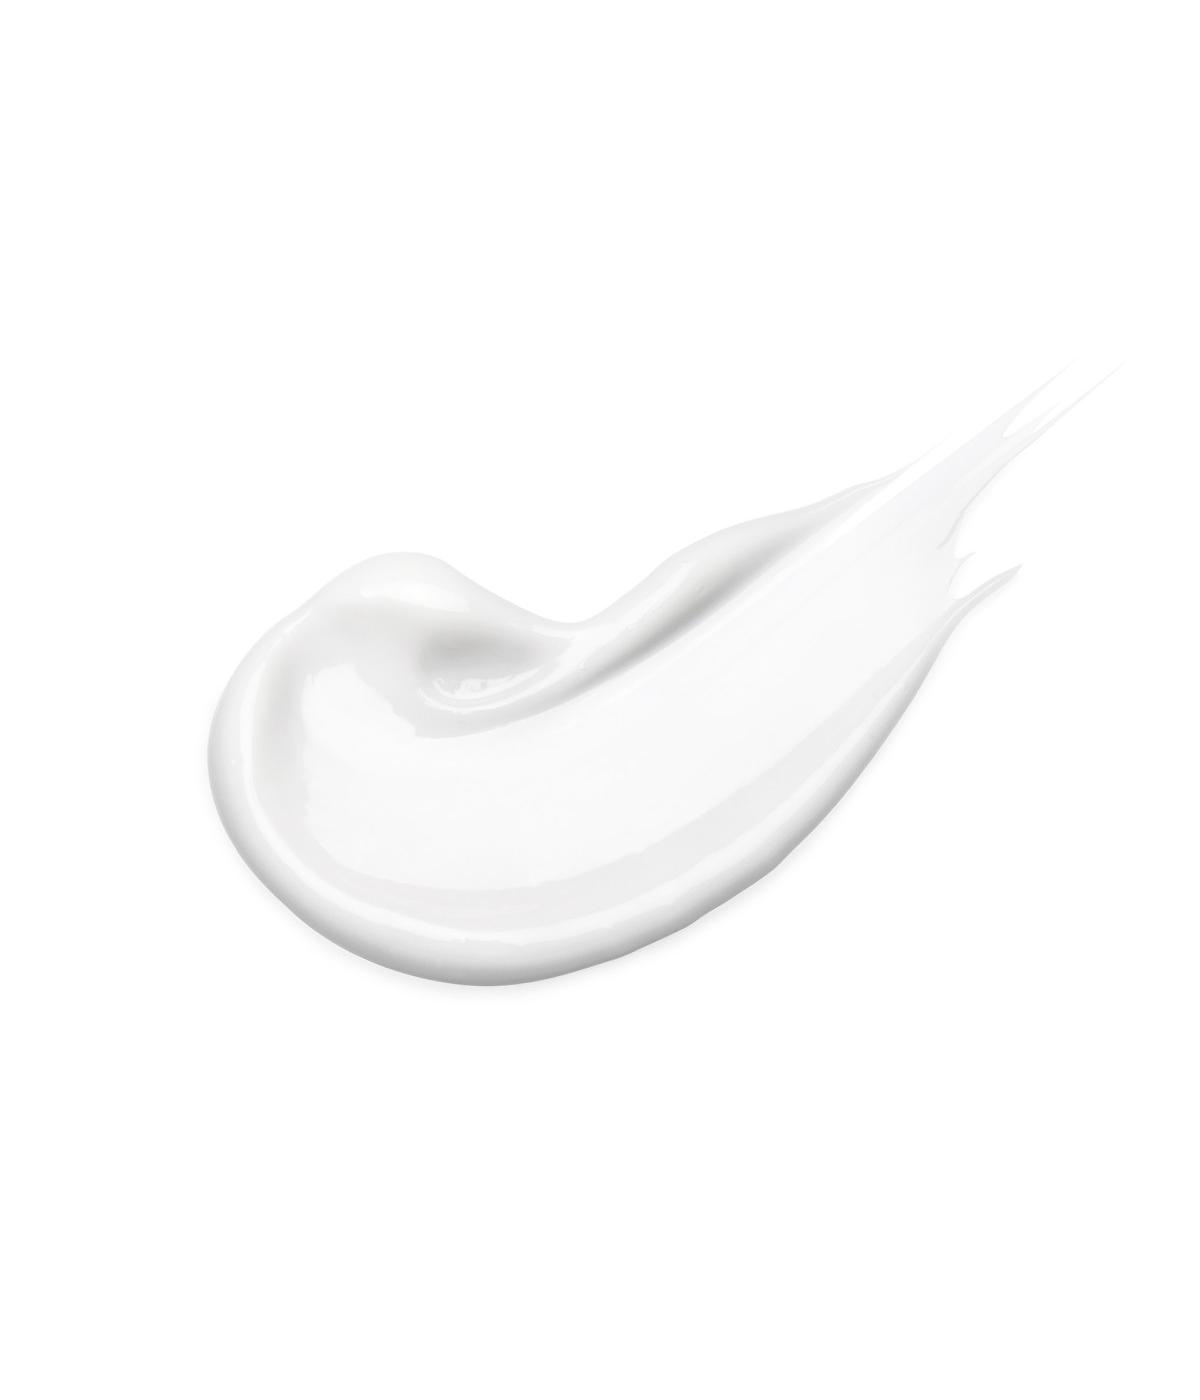 Eucerin Skin Calming Daily Moisturizing Cream Tube; image 2 of 2